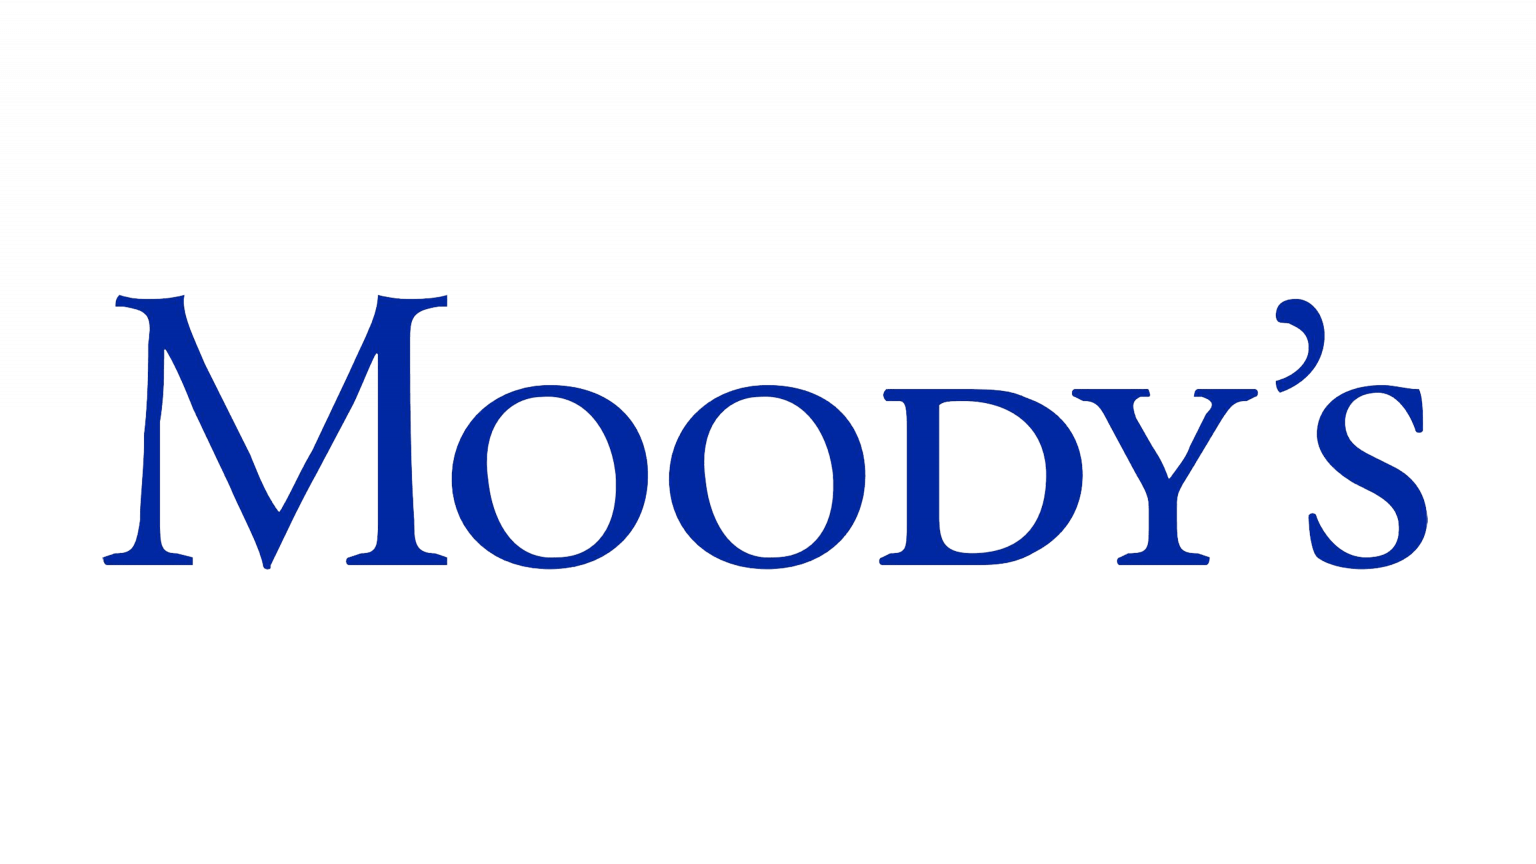 Moodys logo